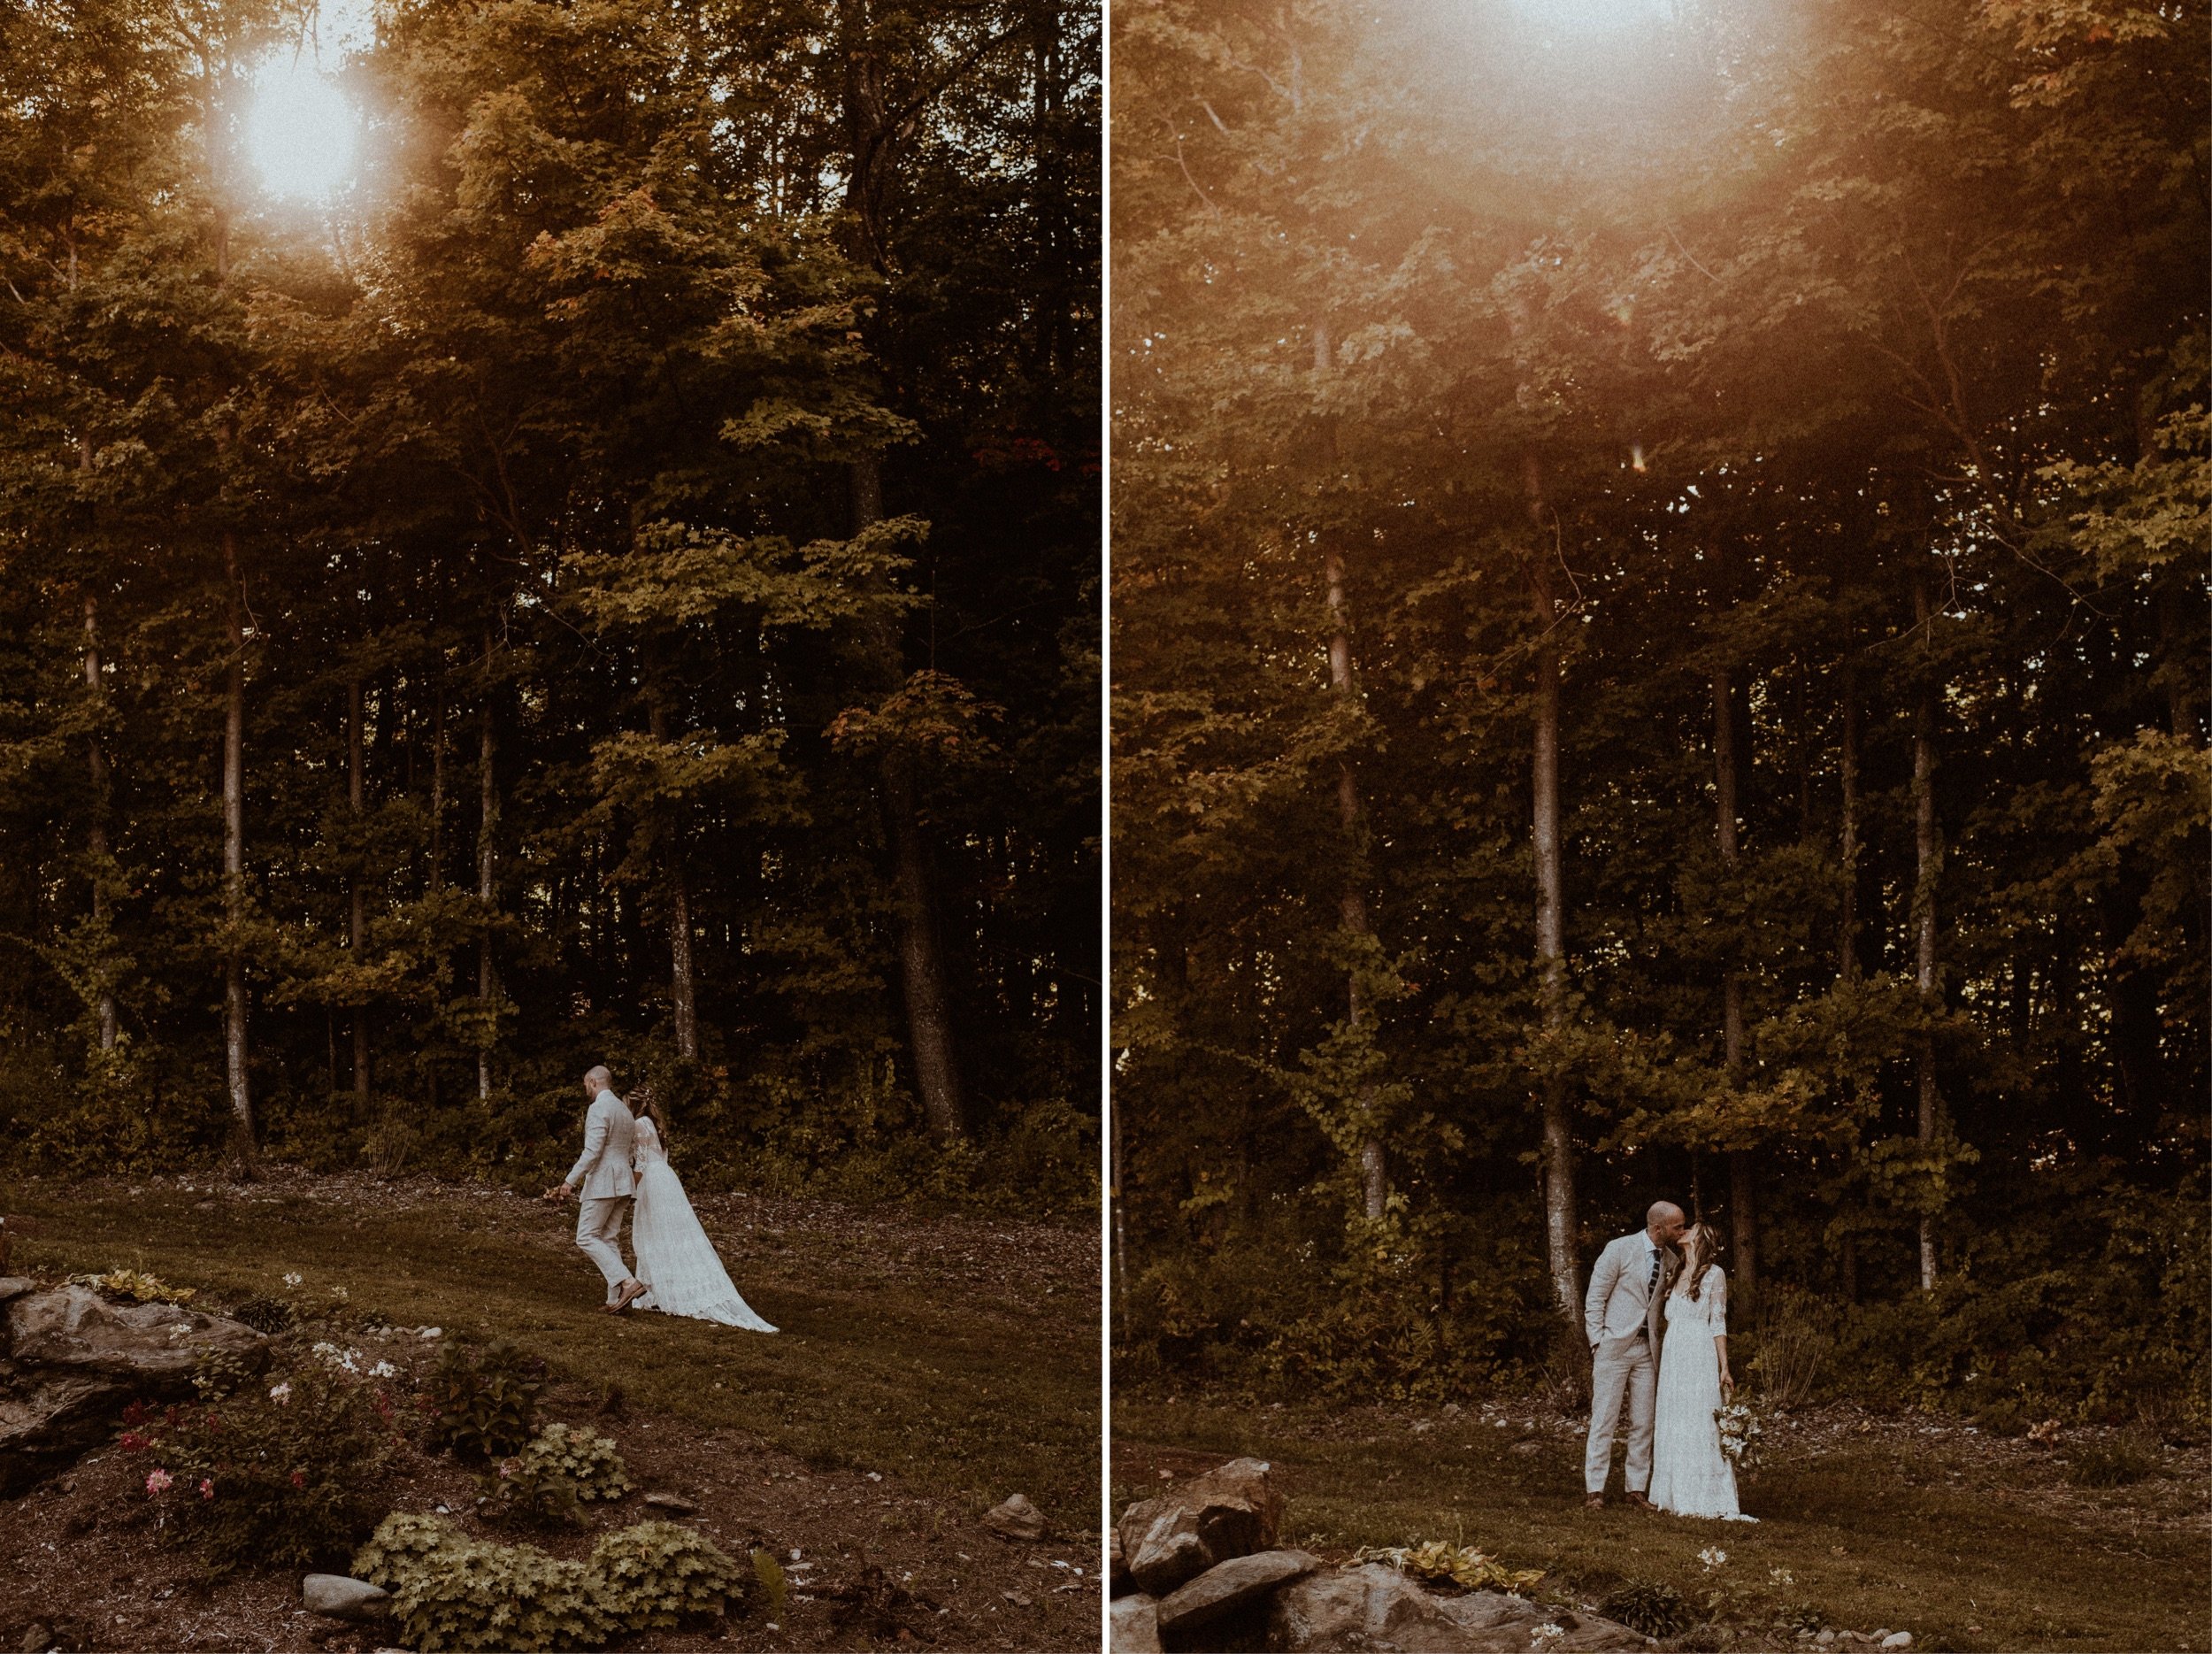 048_Gloriosa & Co Fall Wedding at The Curtis House Ashfield MA - Vanessa Alves Photography.jpg